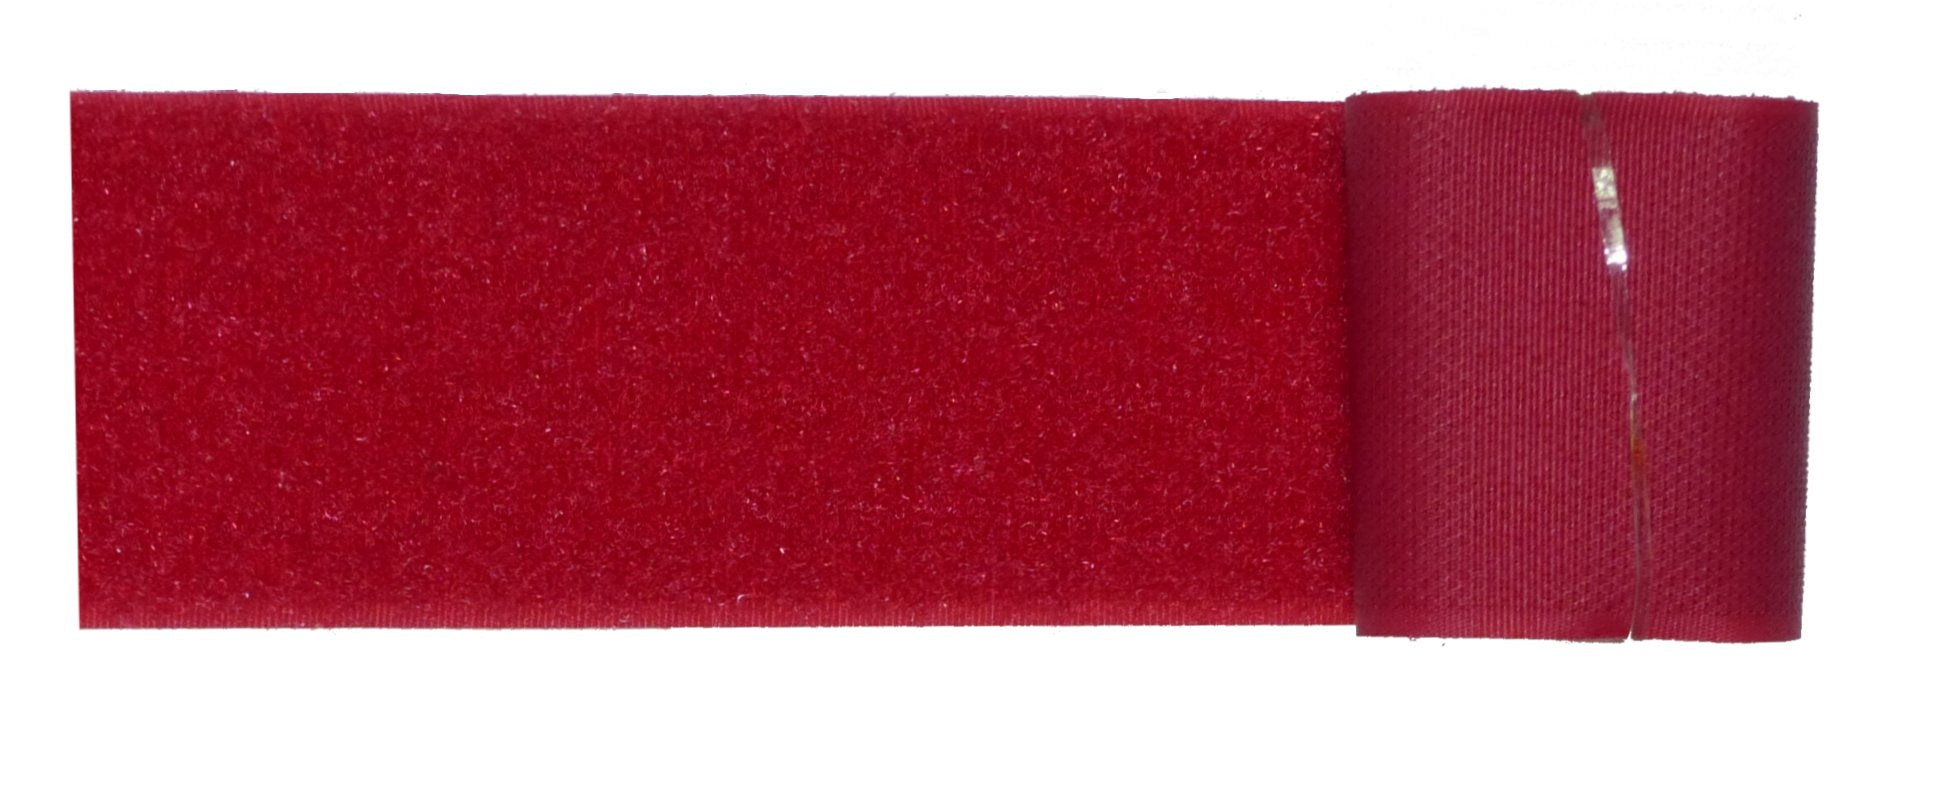 Benristraps 50mm sewable loop tape in red